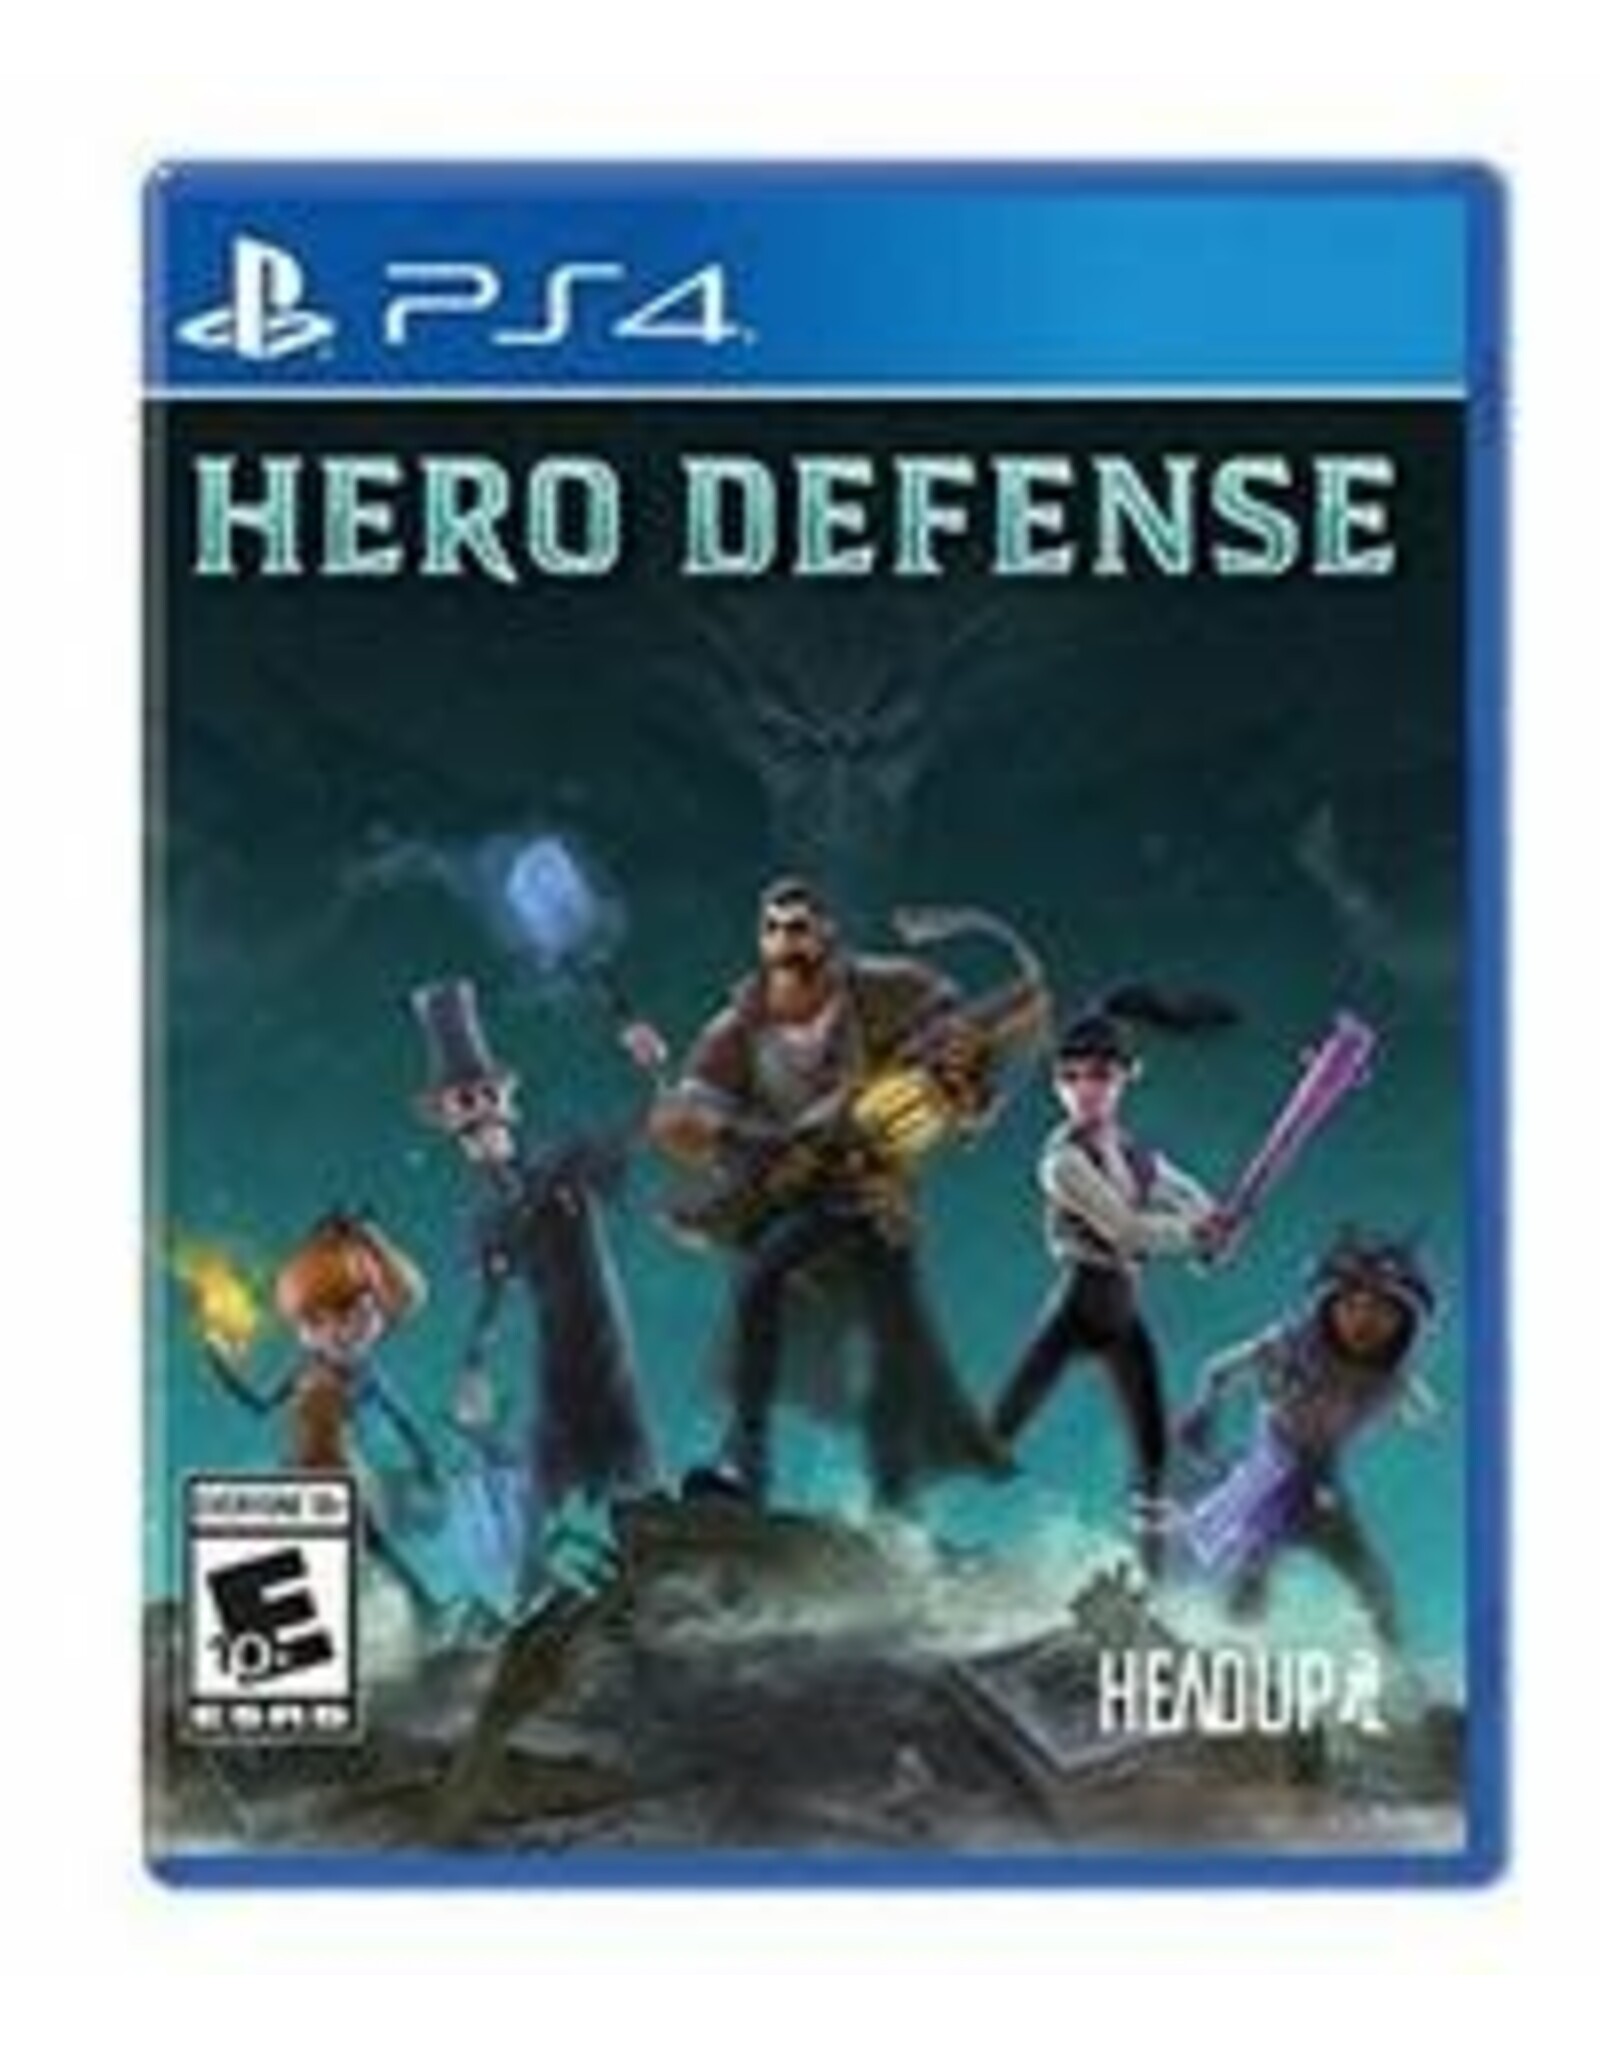 Playstation 4 Hero Defense (Used)